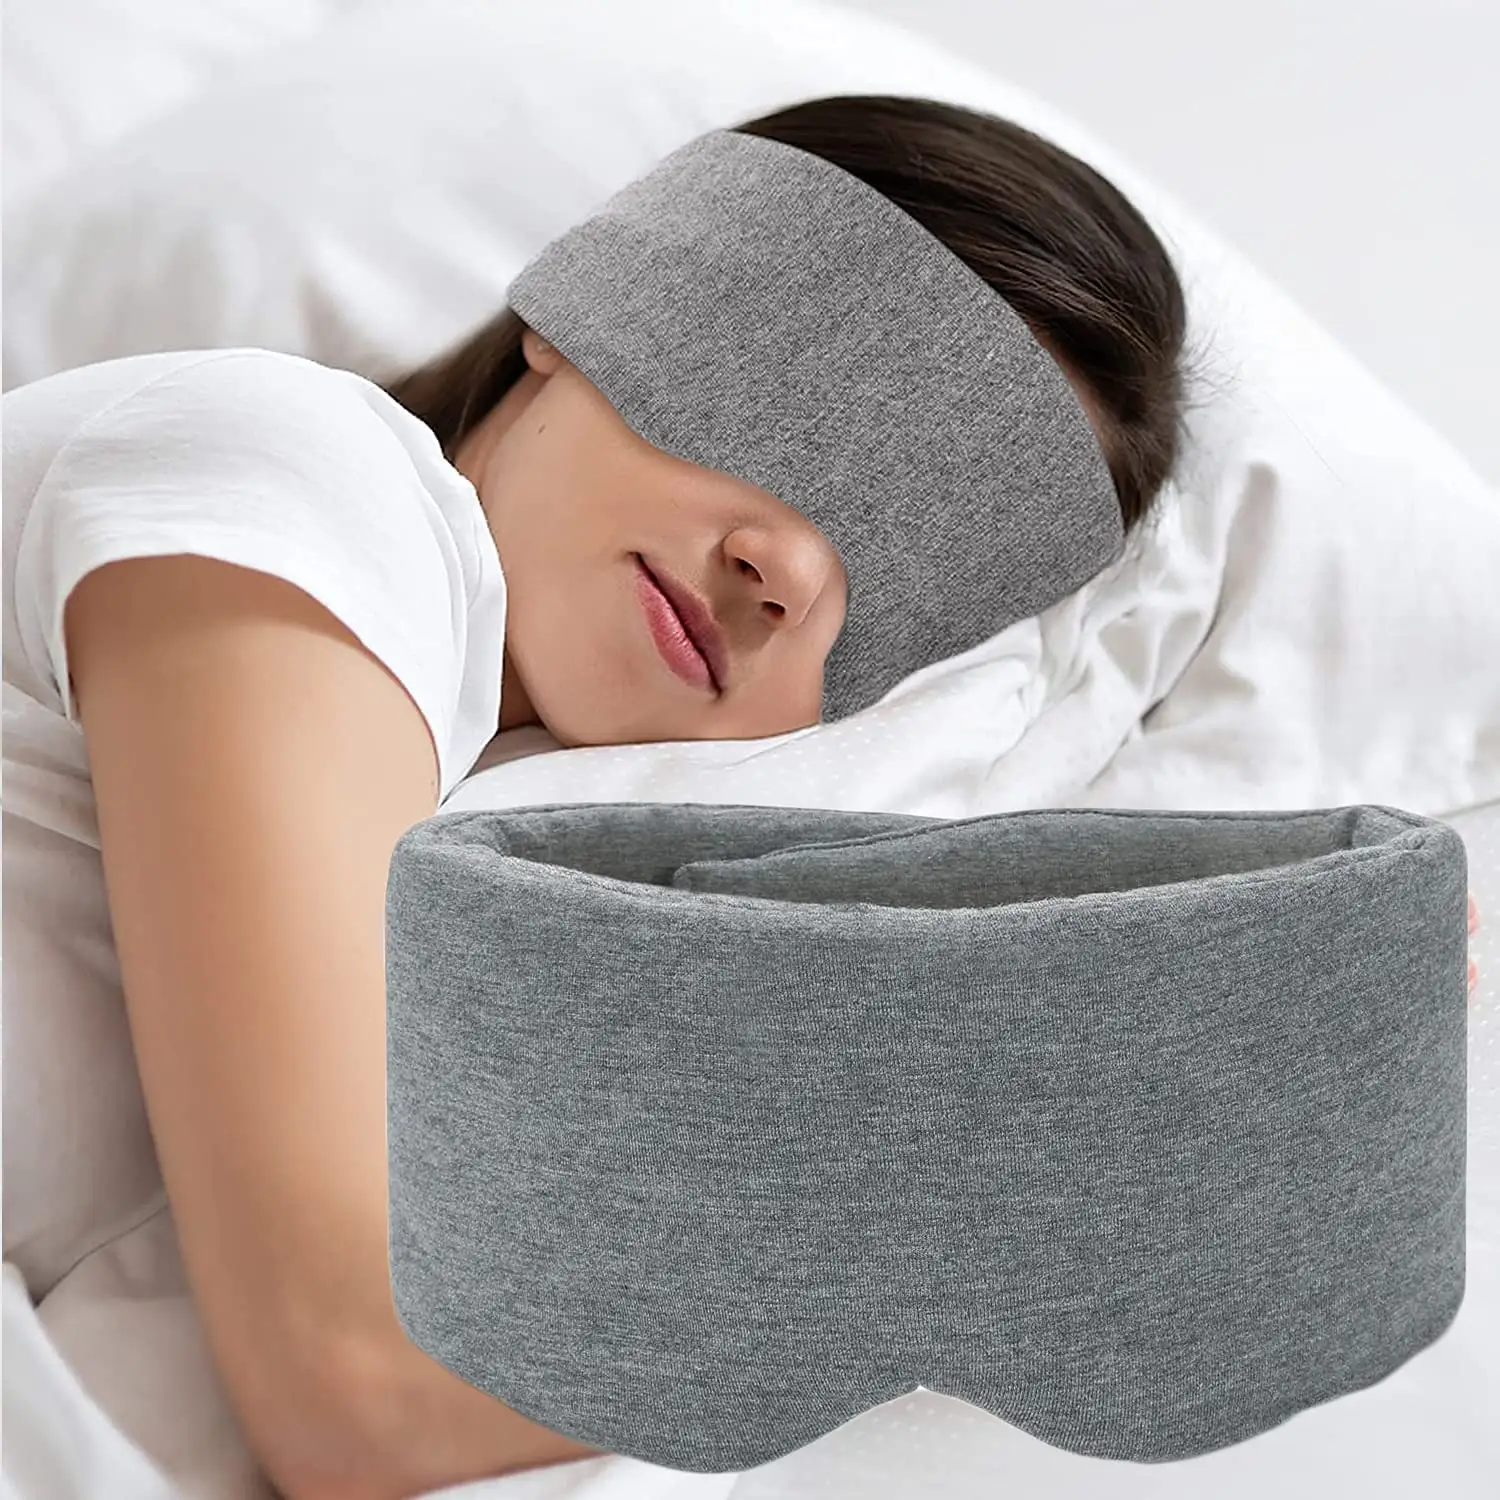 OEM factory sleeping eye mask maschera per dormire in seta imbottita che abbraccia il viso per un sonno profondo